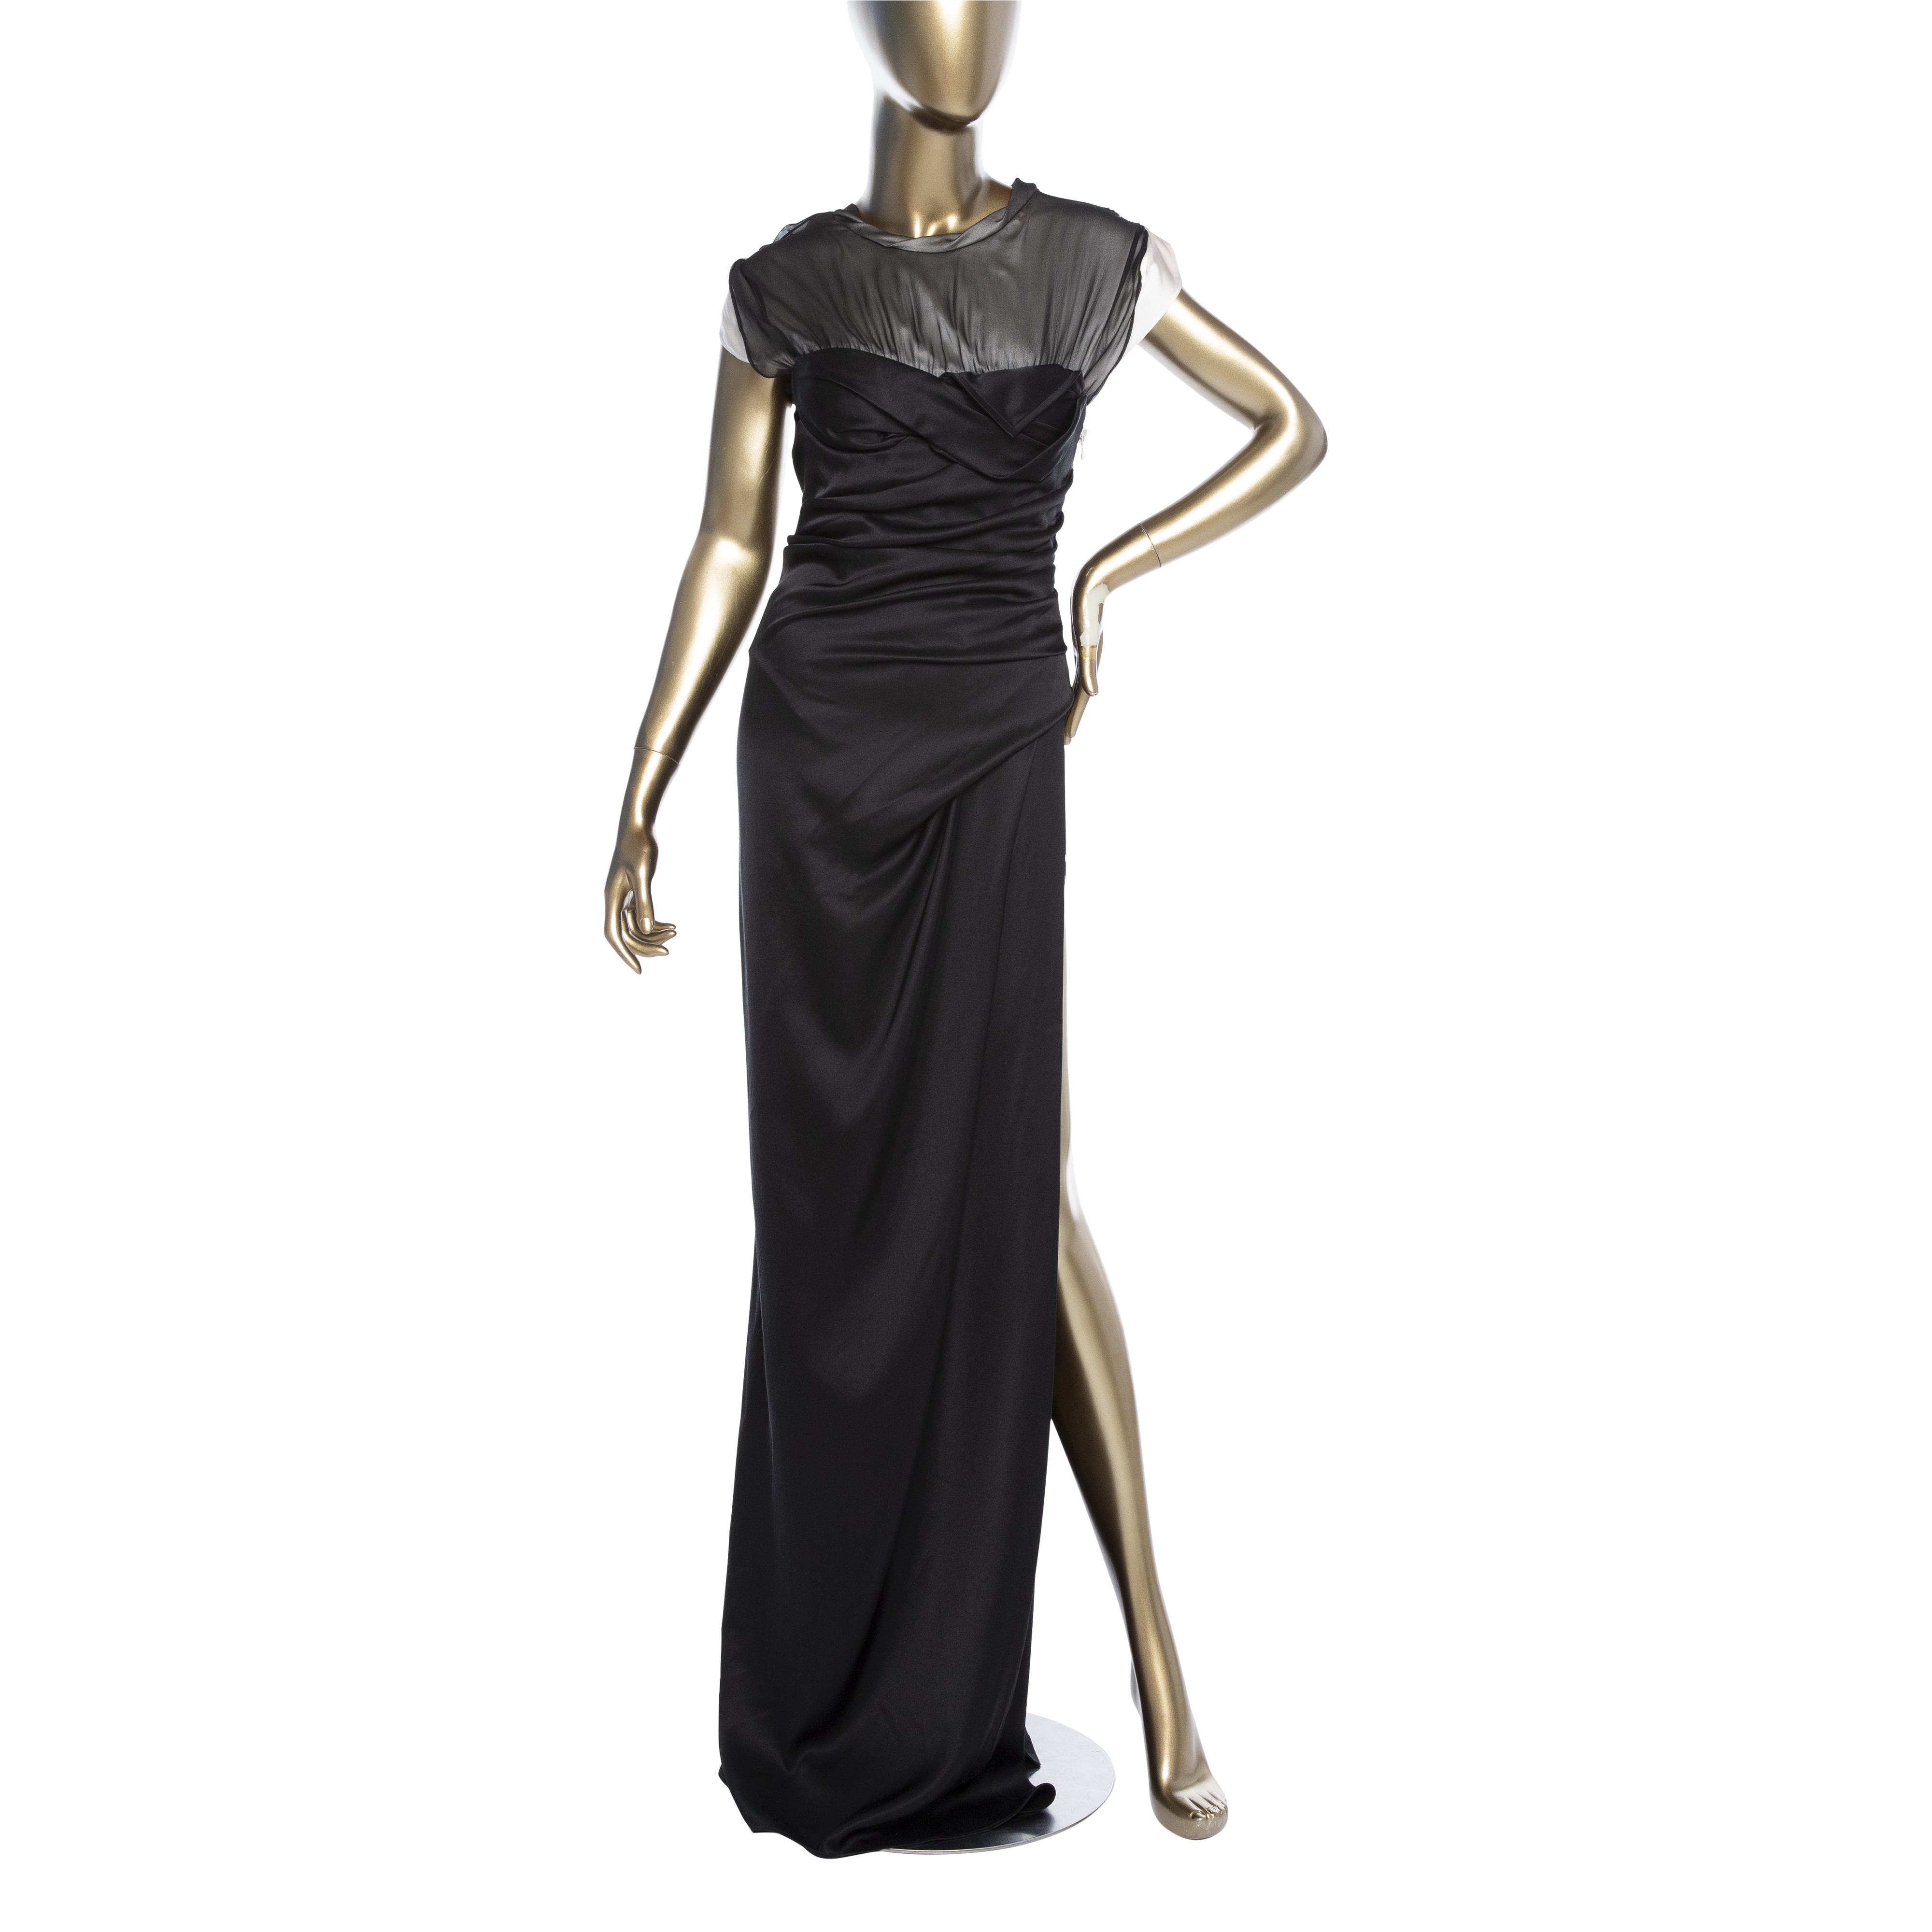 ALEXANDER WANG: dress in stretch nylon - Black | ALEXANDER WANG dress  4CC4236622 online at GIGLIO.COM